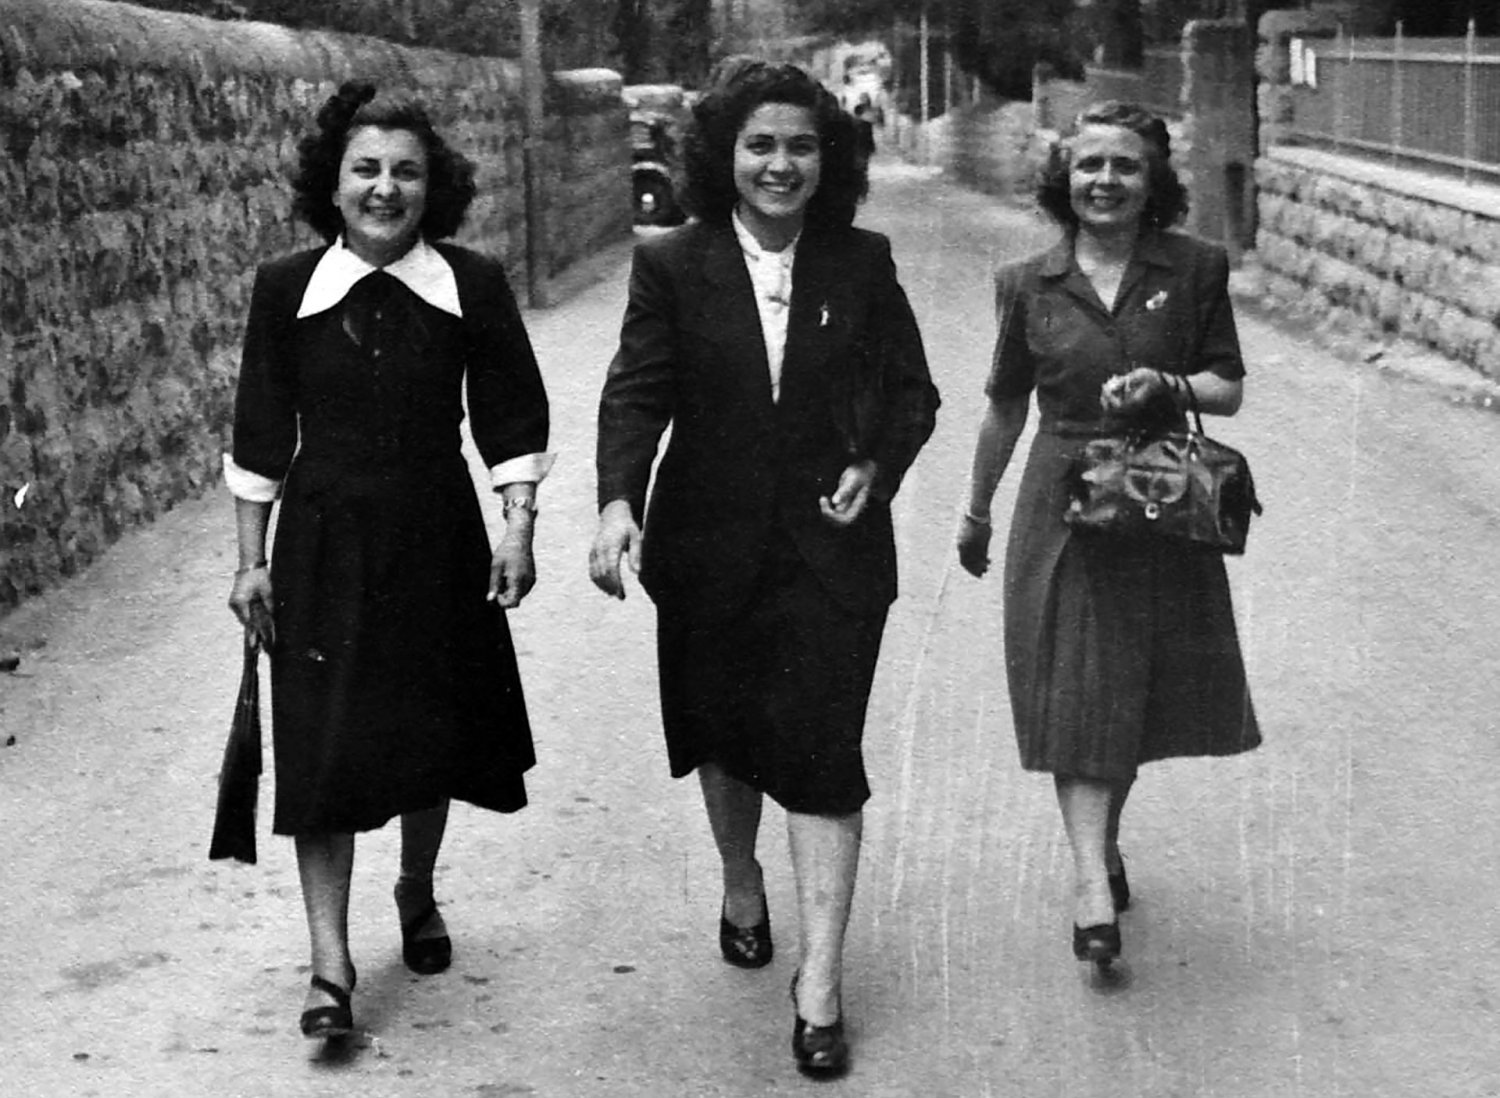 Linda Farradj, Zakia Jabre, and Virginie Farradj walk in the German Colony in Jerusalem, 1940s